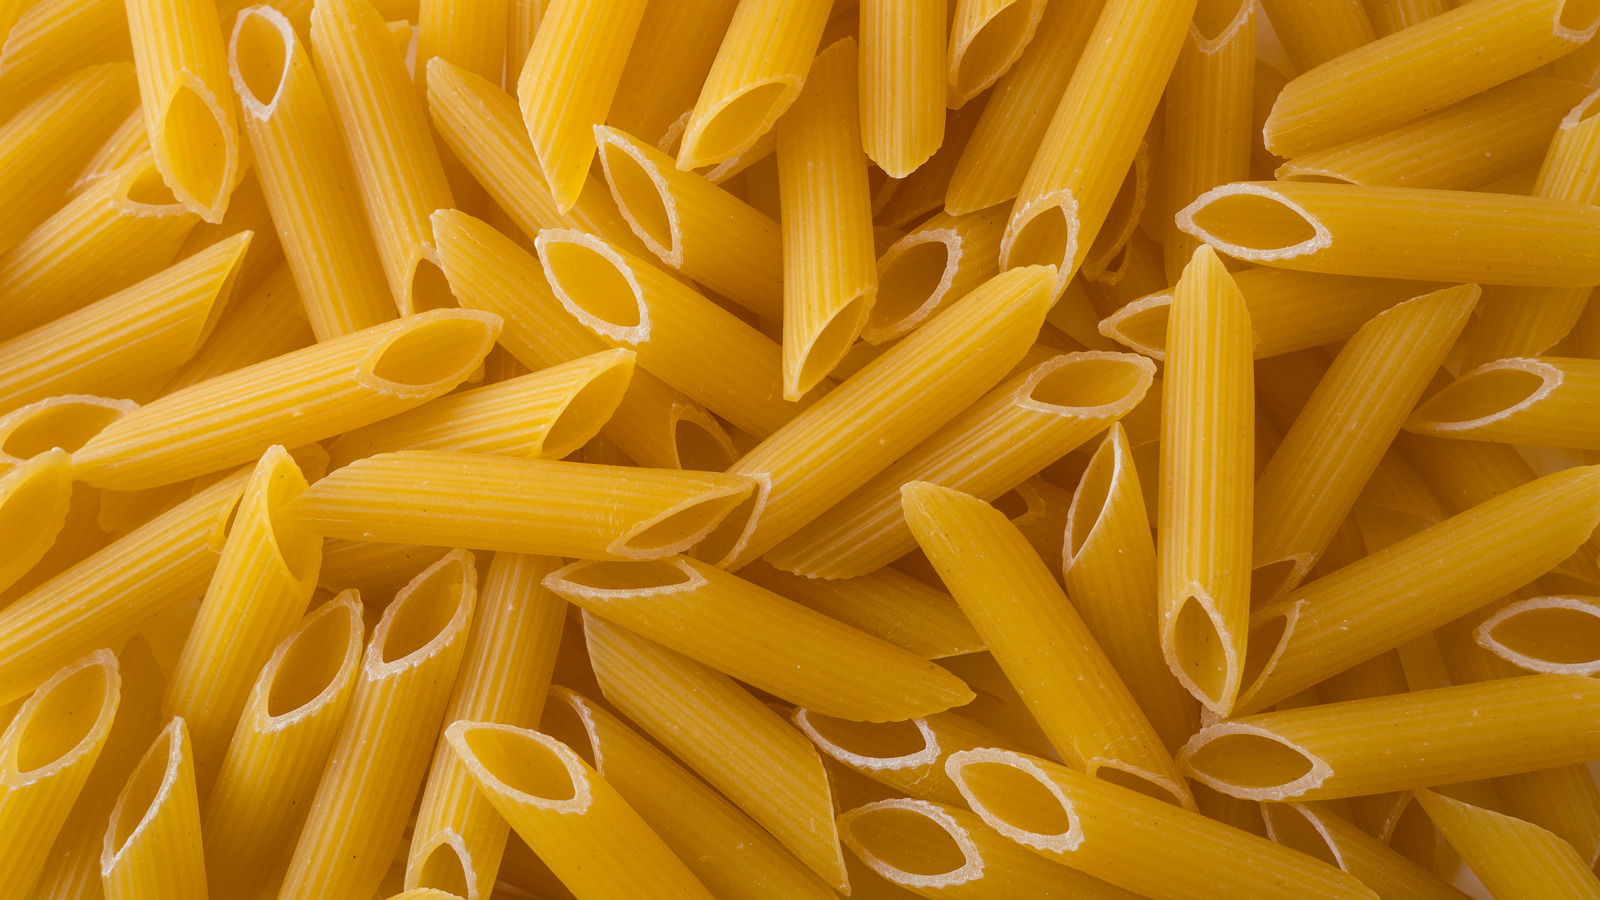 Popular Pasta Brands Ranked Worst To Best